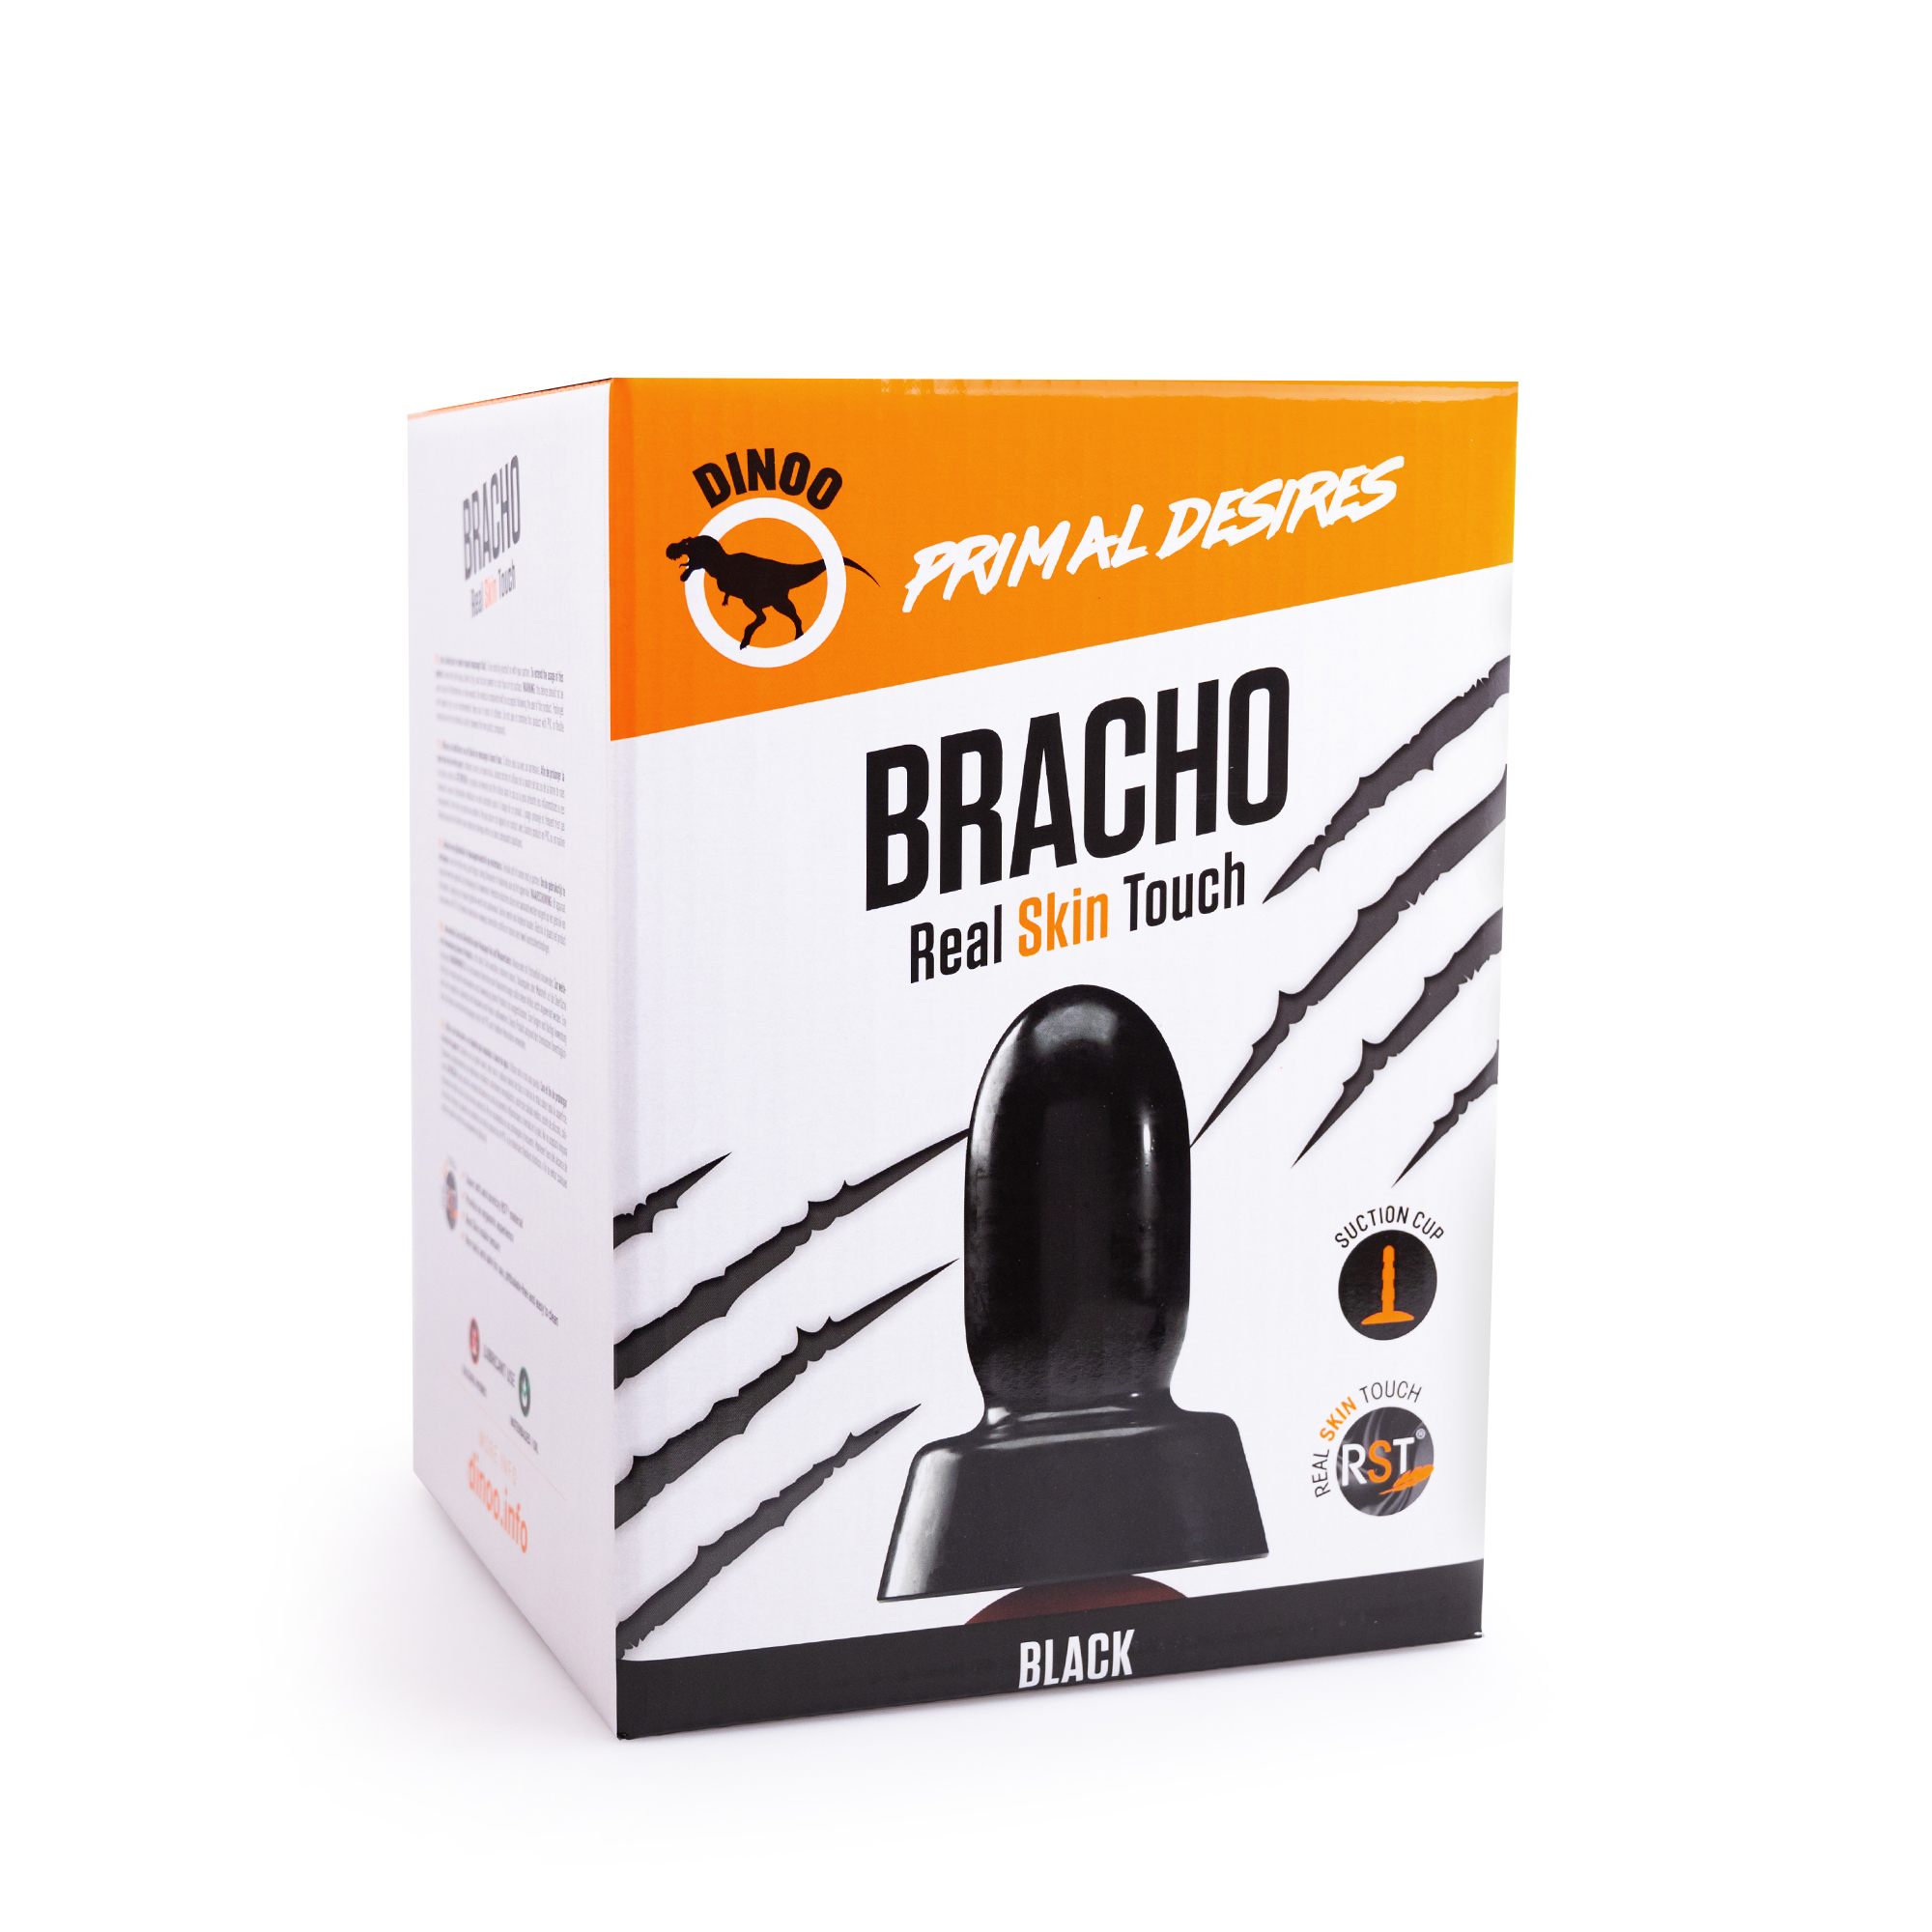 DINOO PRIMAL - Bracho Black